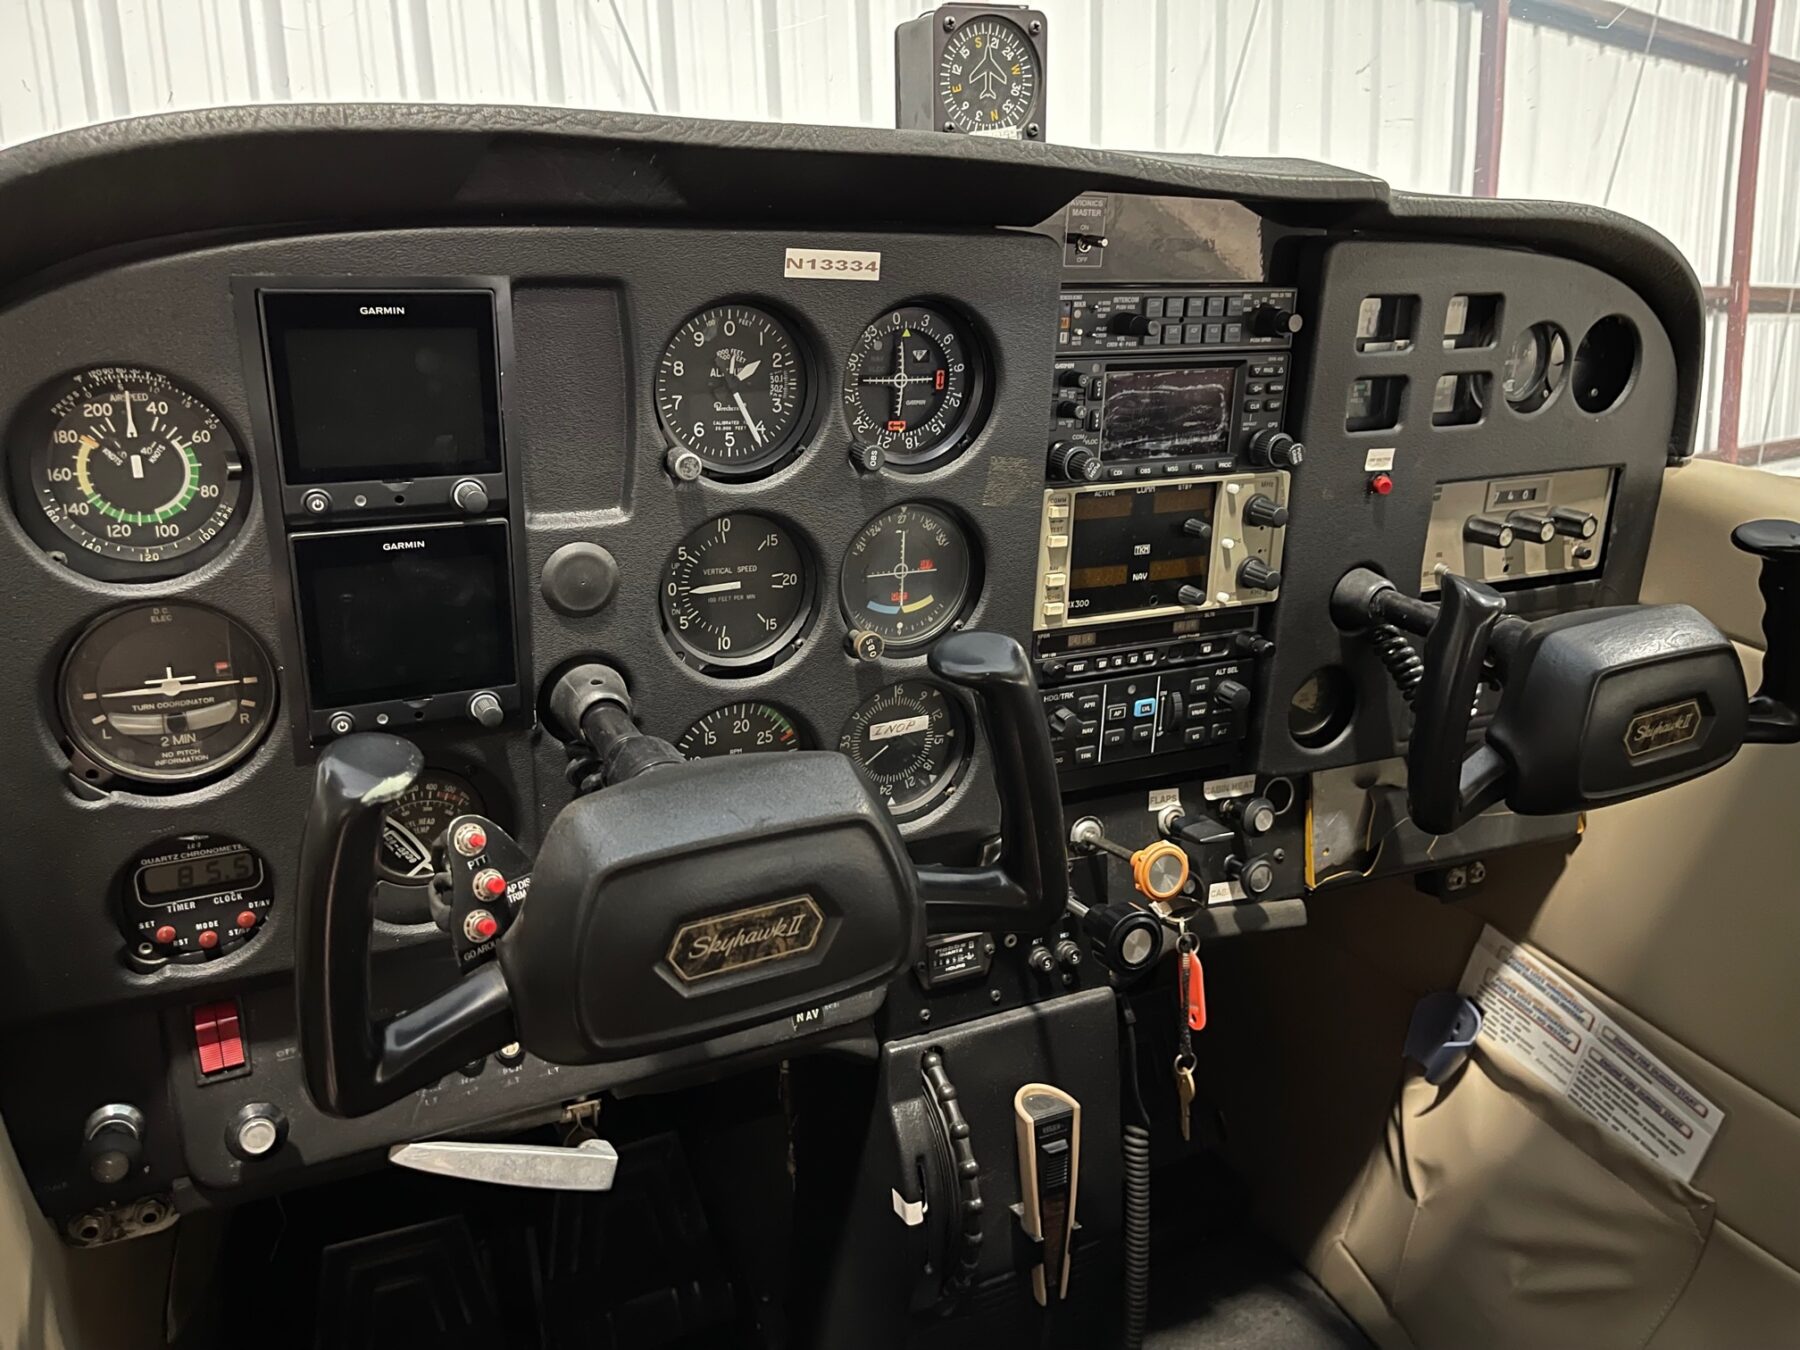 172 G5 Panel with Garmin Autopilot and 430 GPS